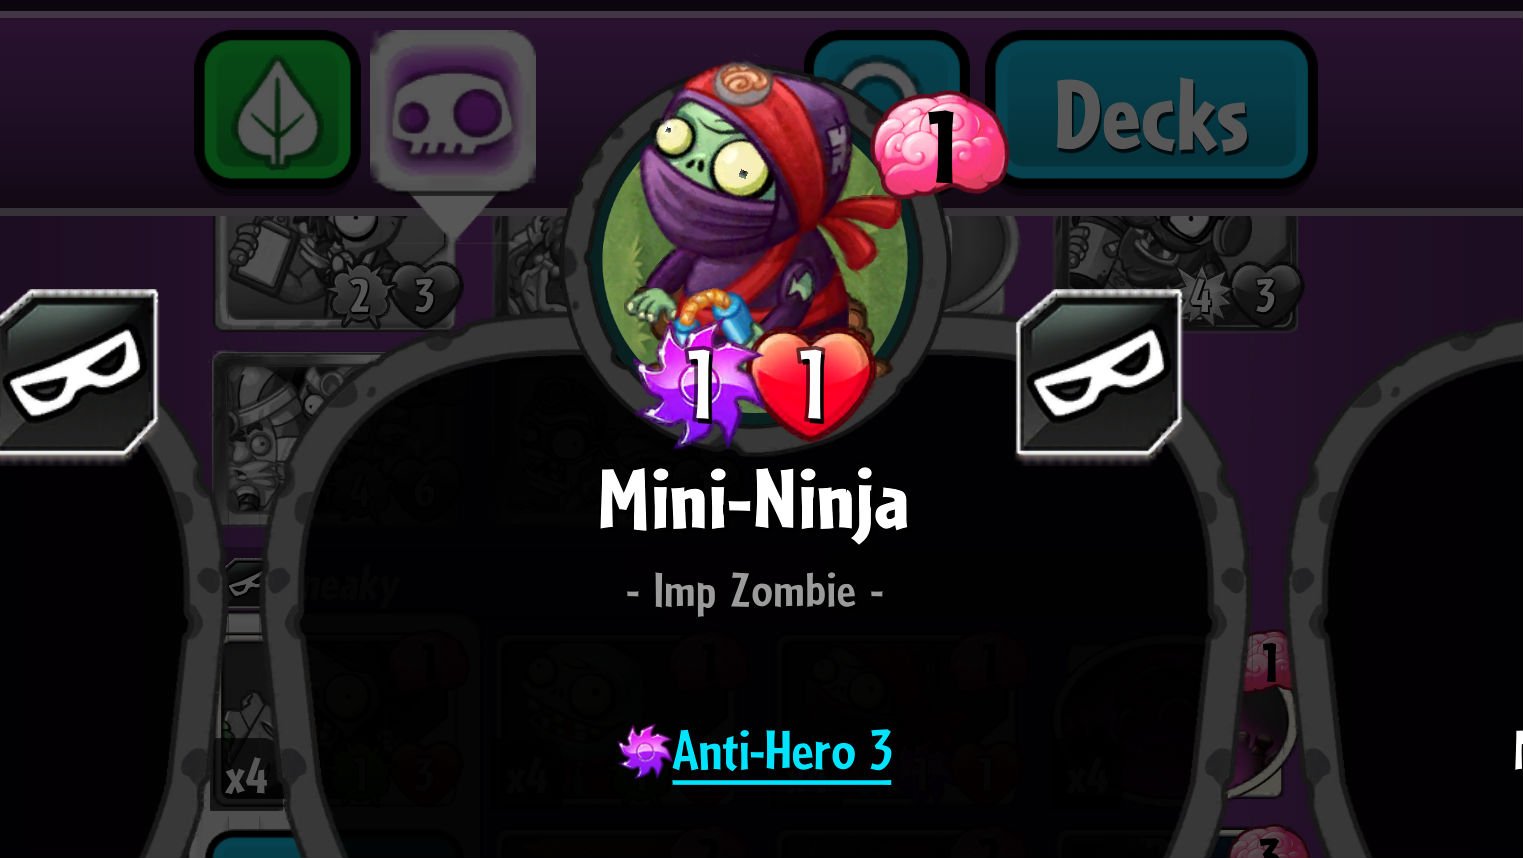 Plants vs. Zombies Heroes Multi-Ninja